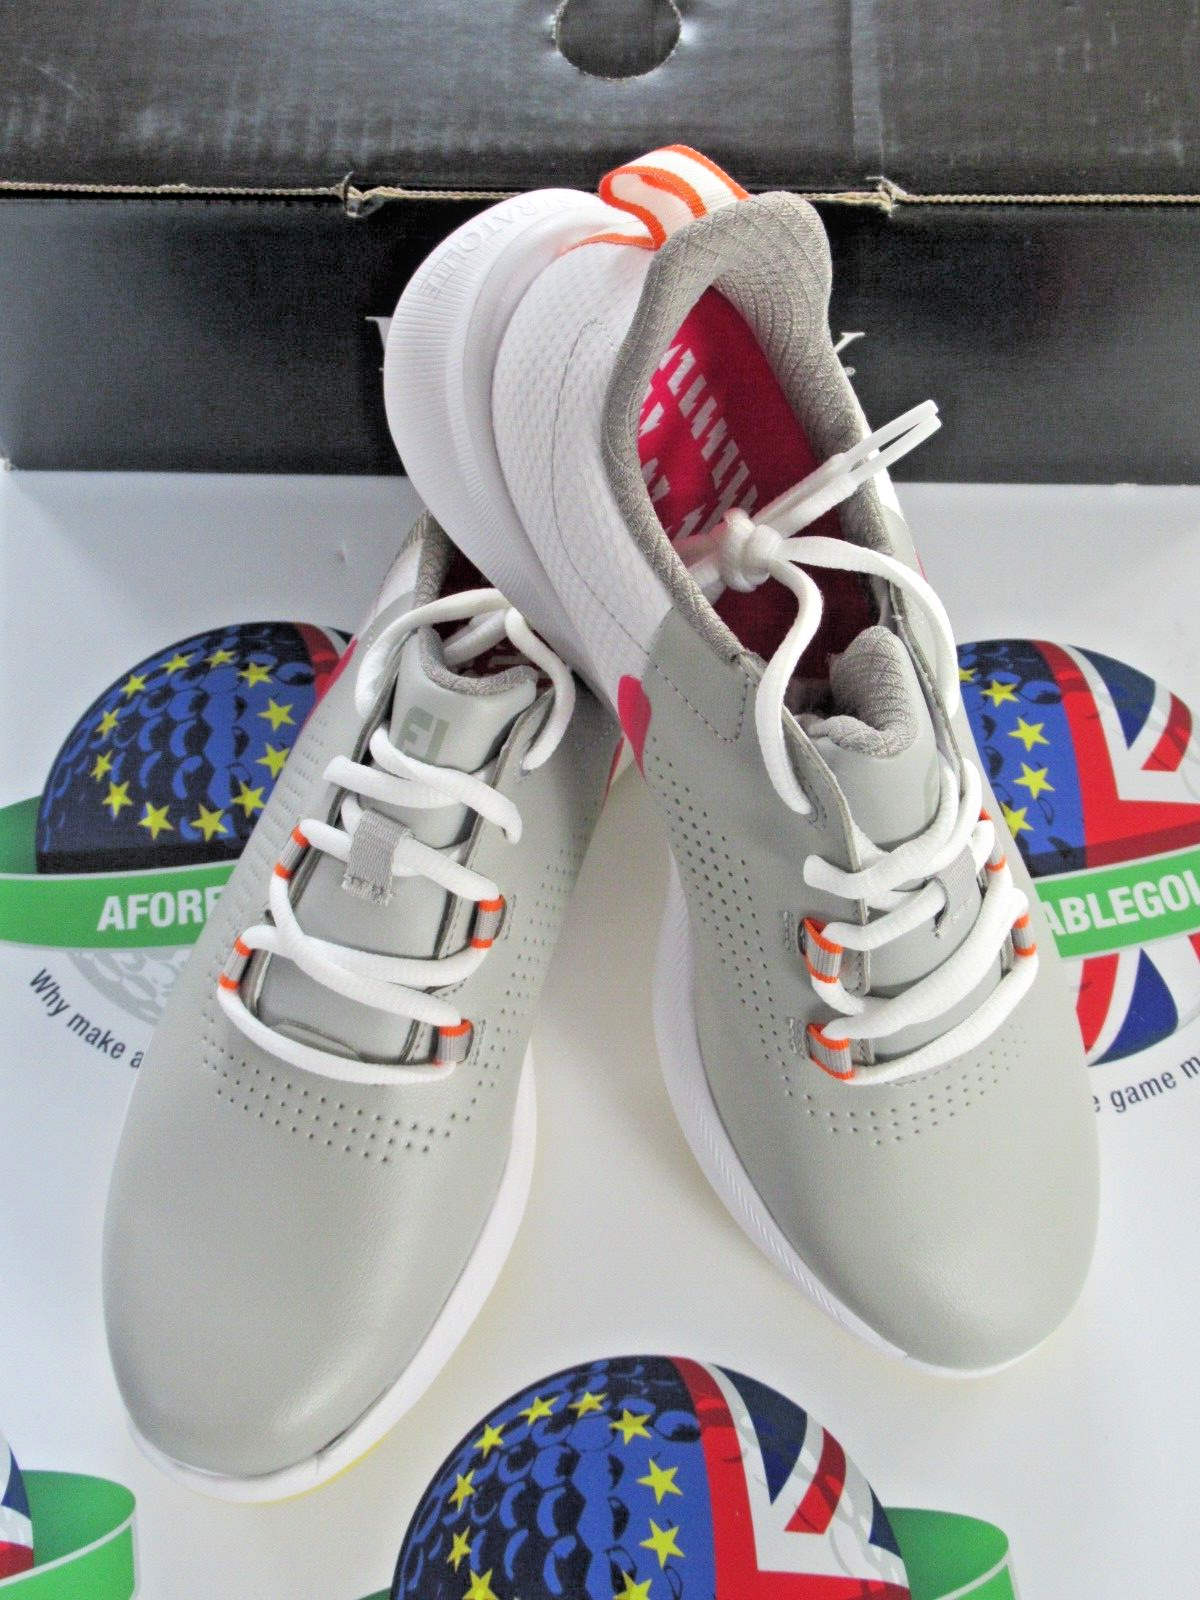 footjoy fuel womens golf shoes grey/white 92372k uk size 4 medium